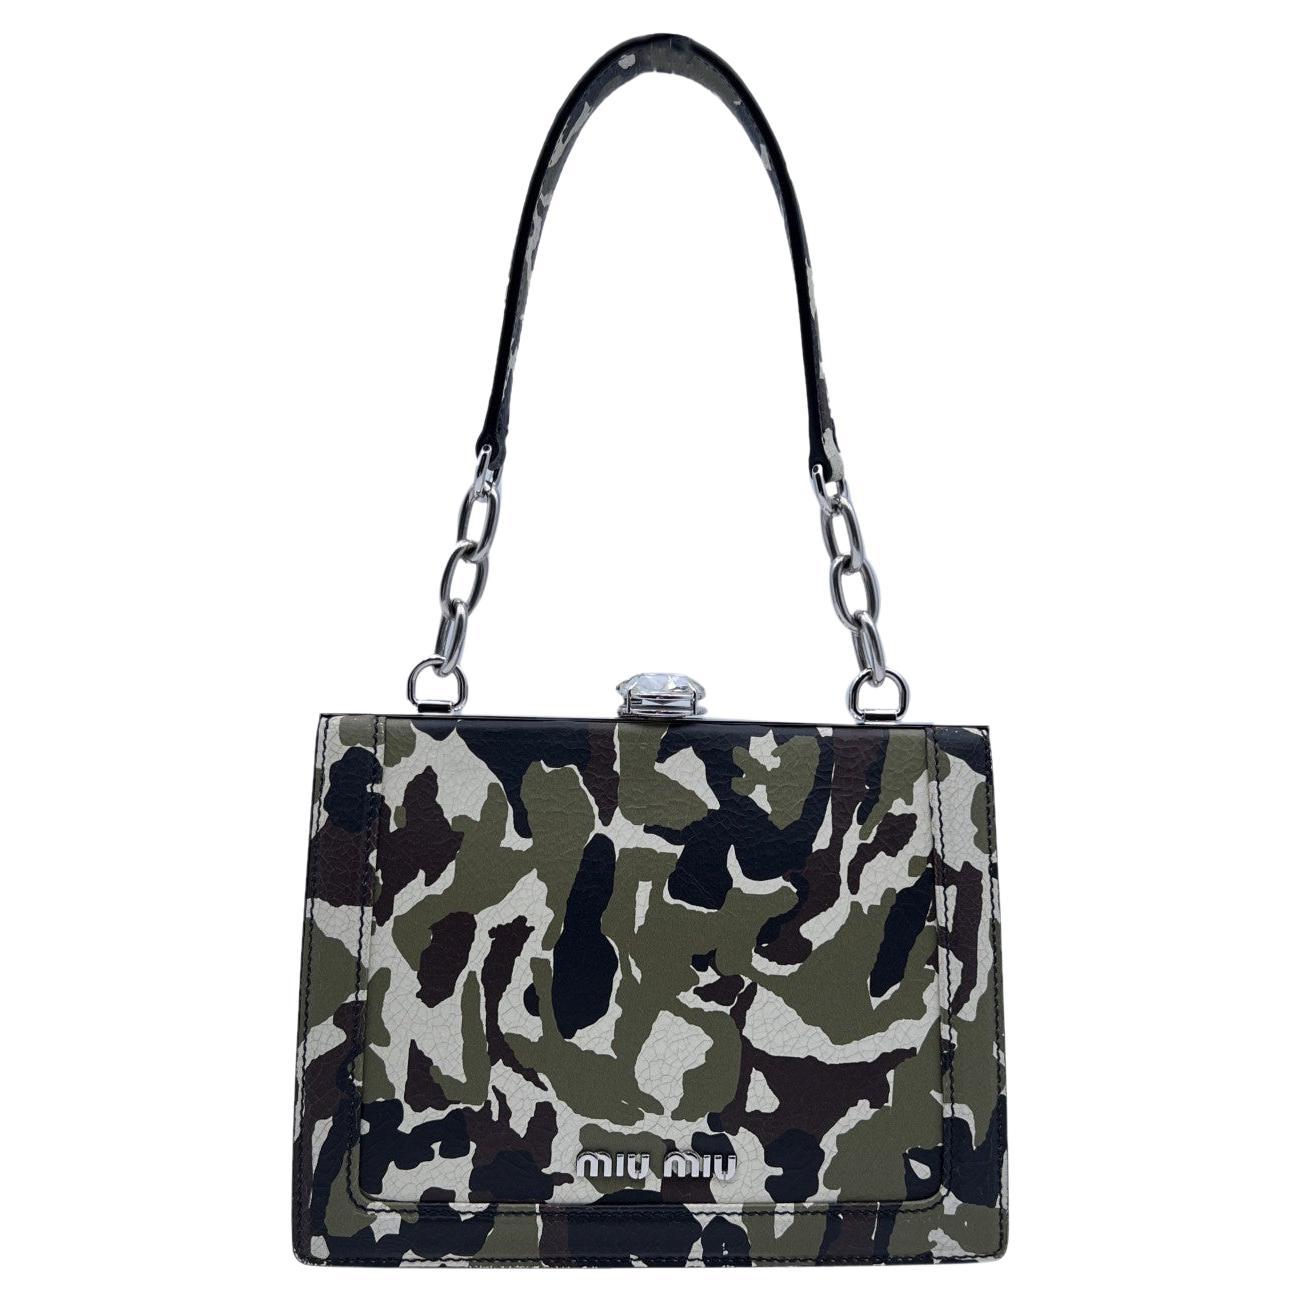 Miu Miu Military Green Camouflage Print Leather Handbag with Crystal For Sale